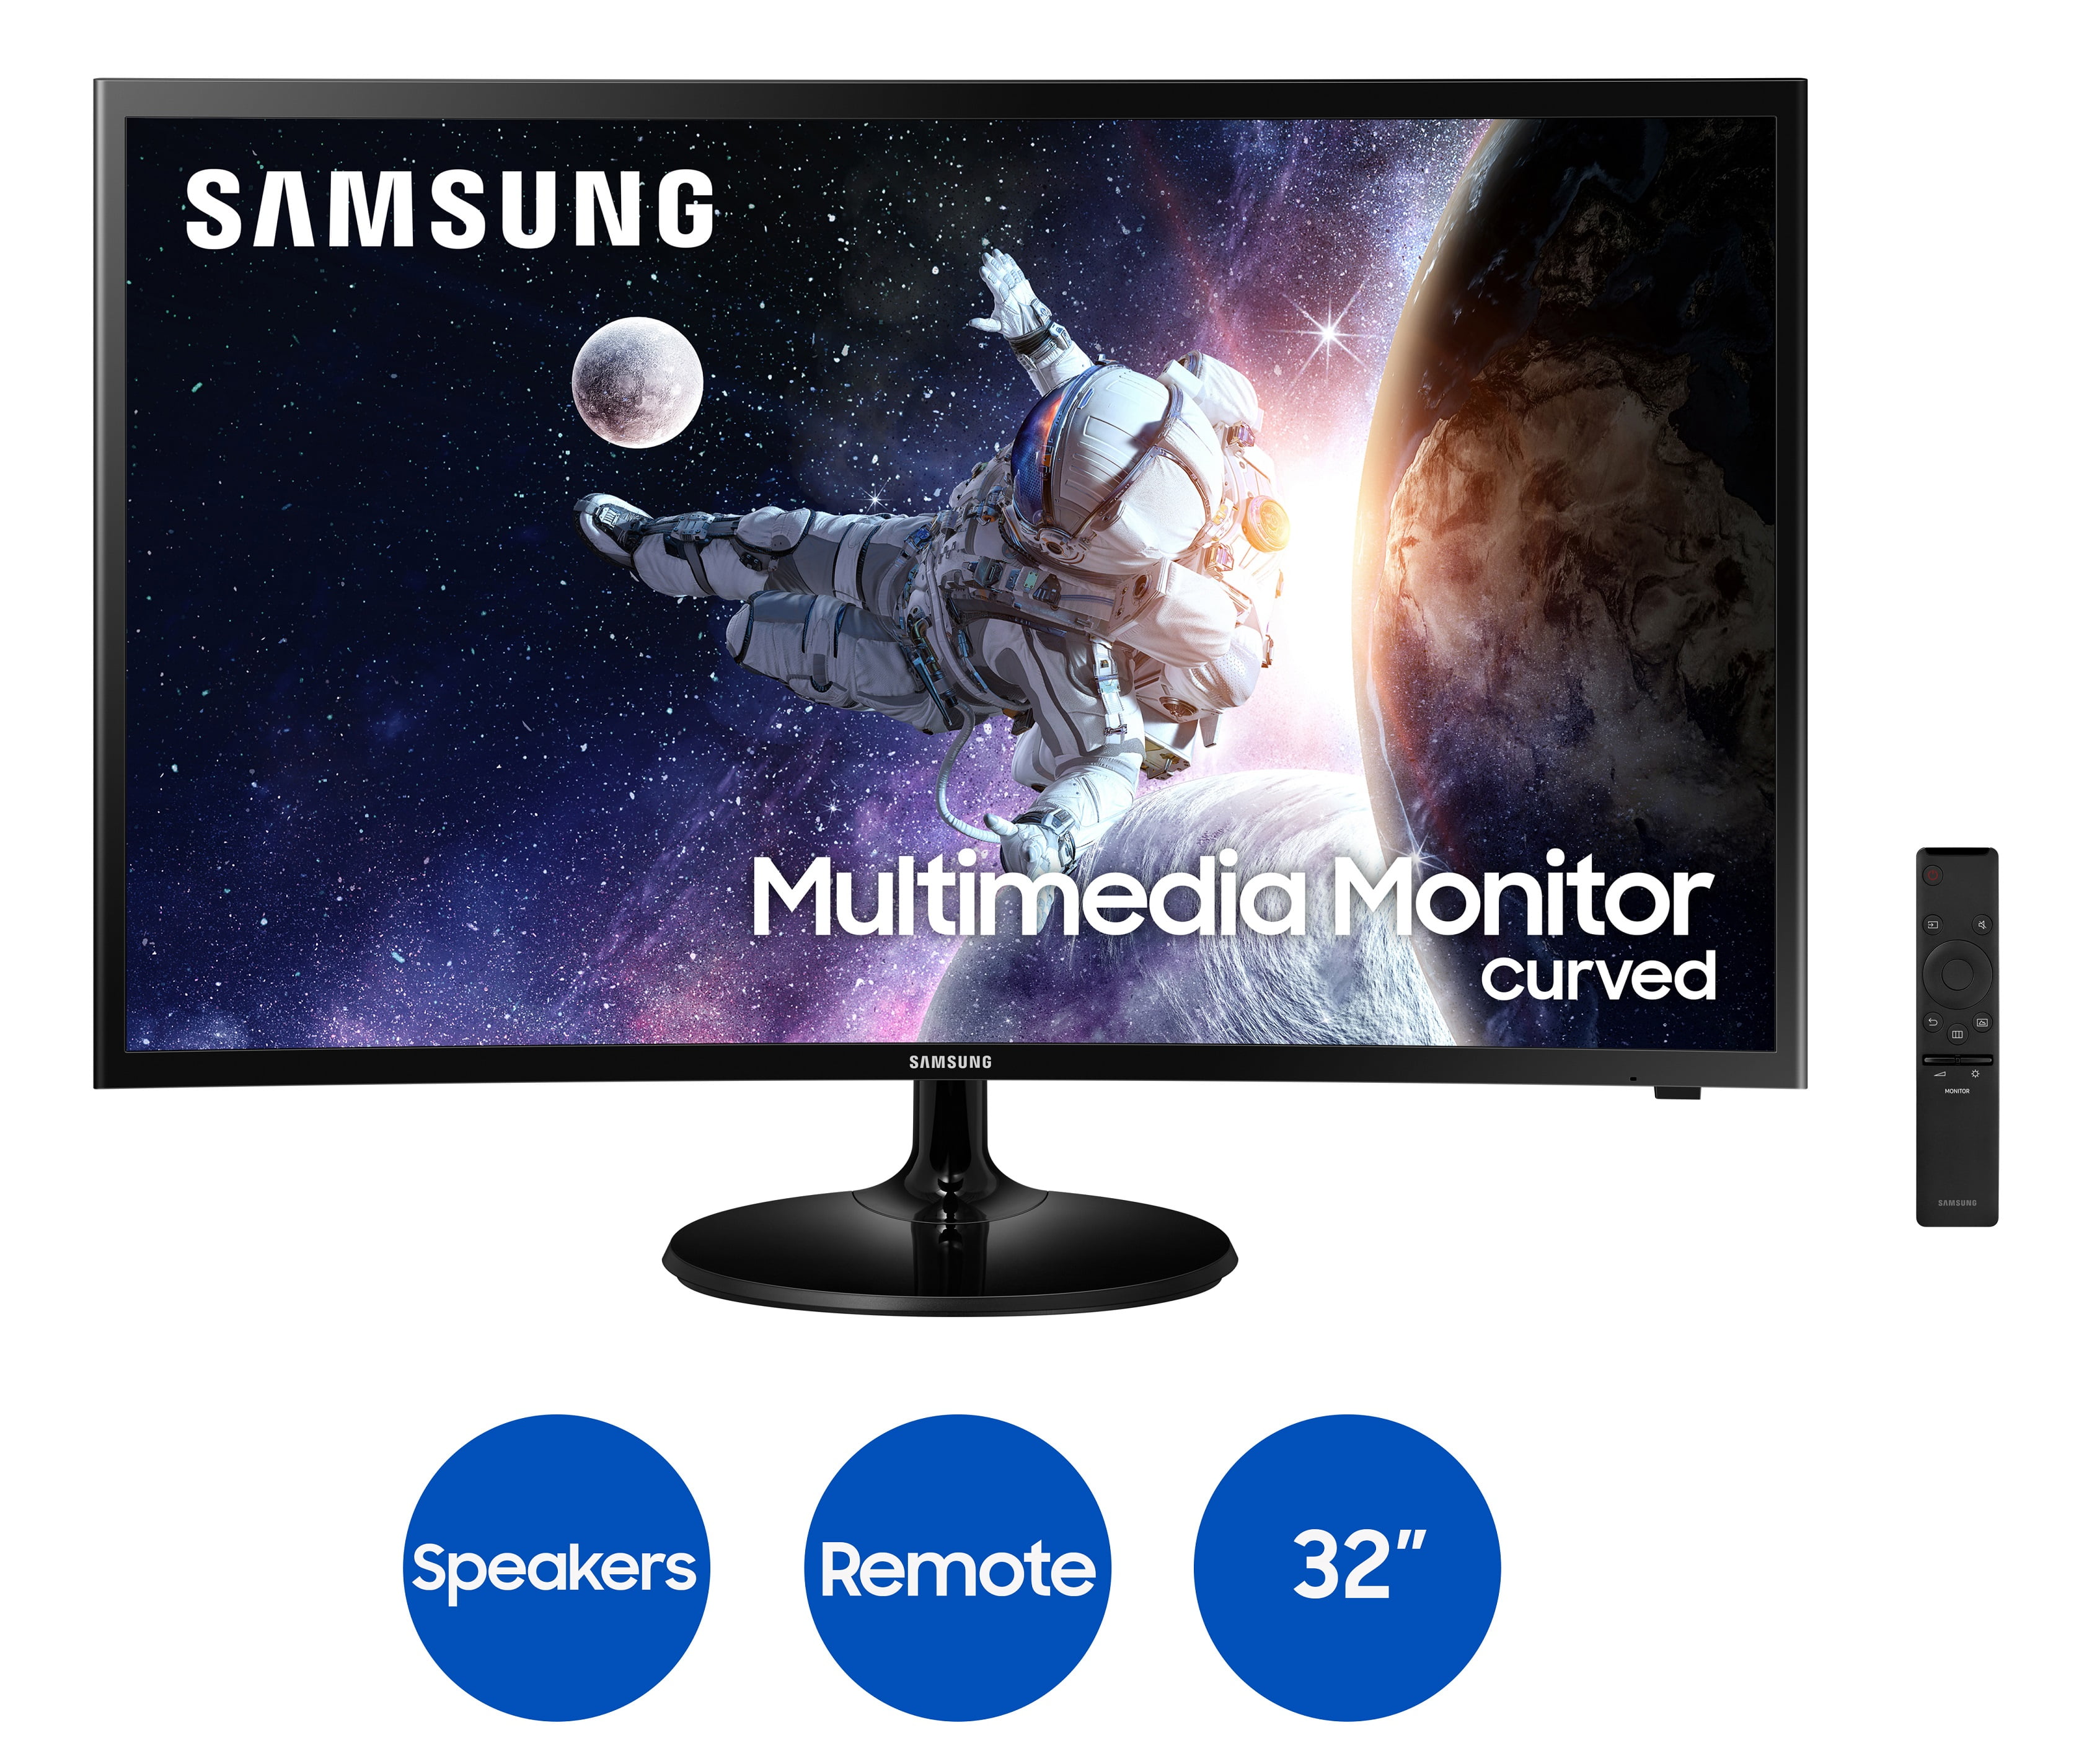 Adquisición cobertura Estéril Samsung 32" Curved 1920x1080 HDMI 60hz 4ms FHD LCD Monitor - LC32F39MFUNXZA  (Speakers Included) - Walmart.com